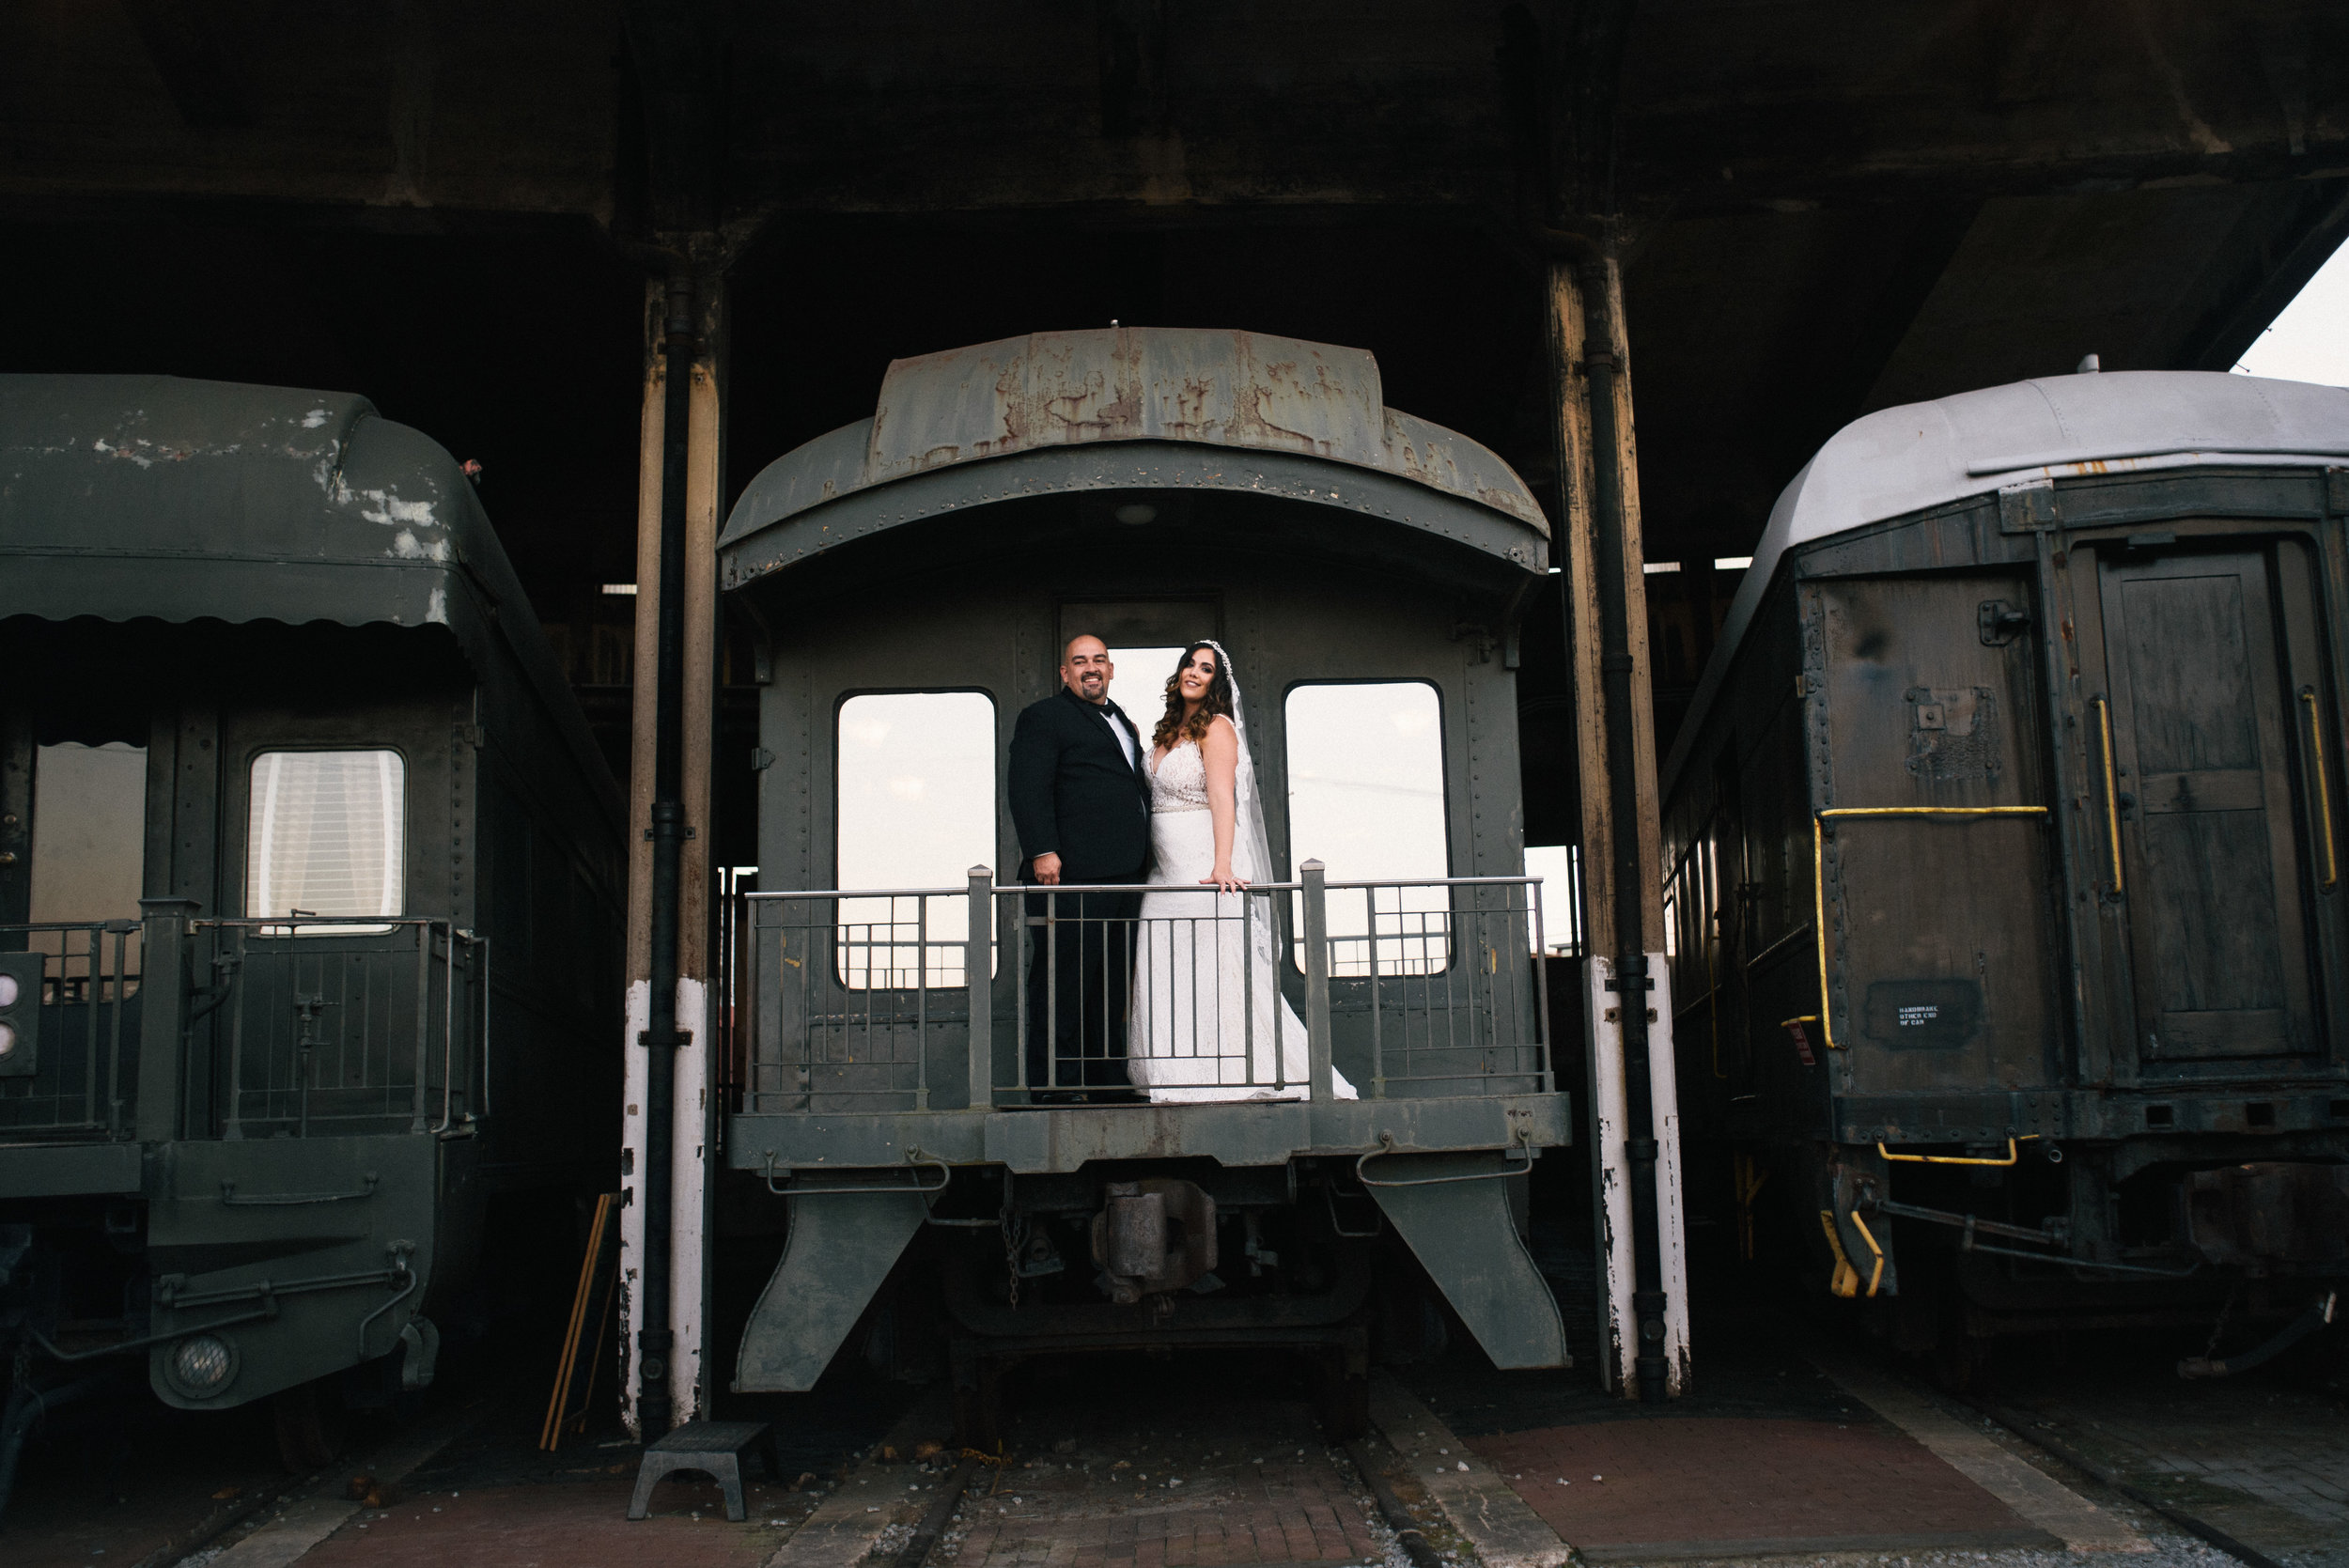 Iggy-and-yesenia-savannah-railroad-museum-wedding-meg-hill-photo- (757 of 1037).jpg